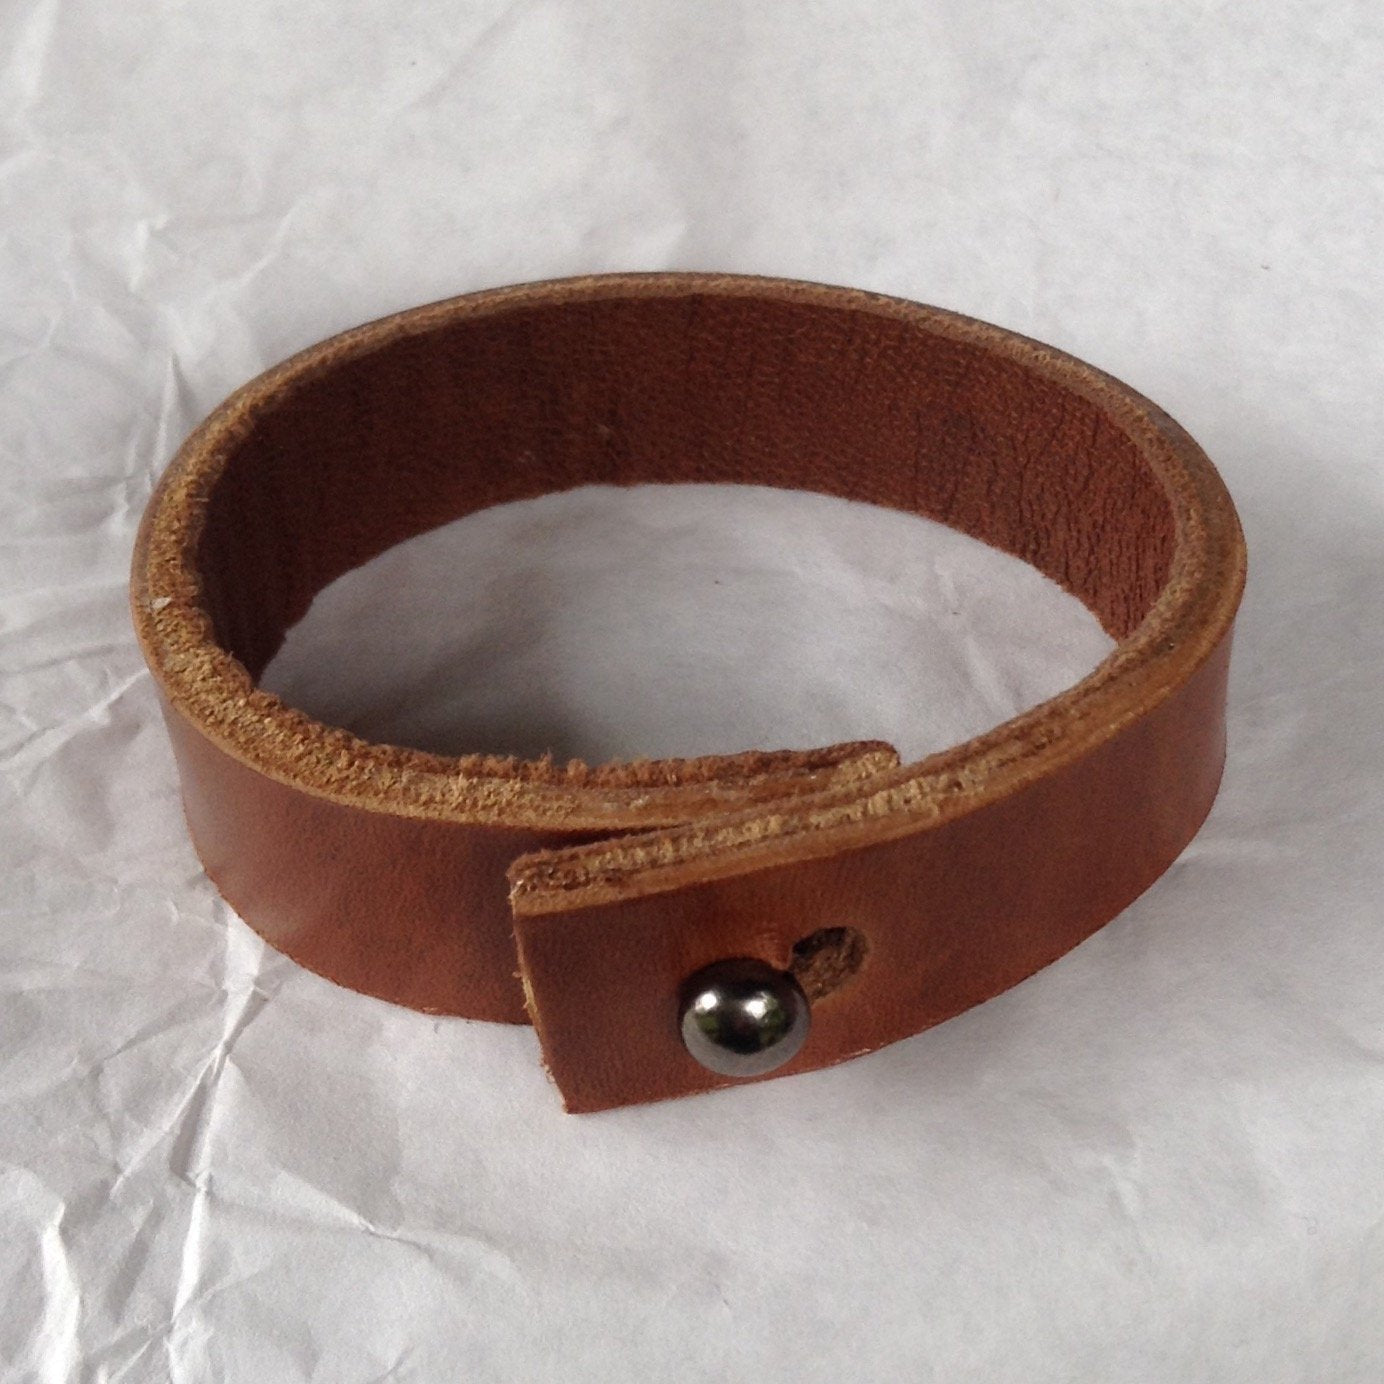 Classic Kidskin lined Caramel leather bracelet.